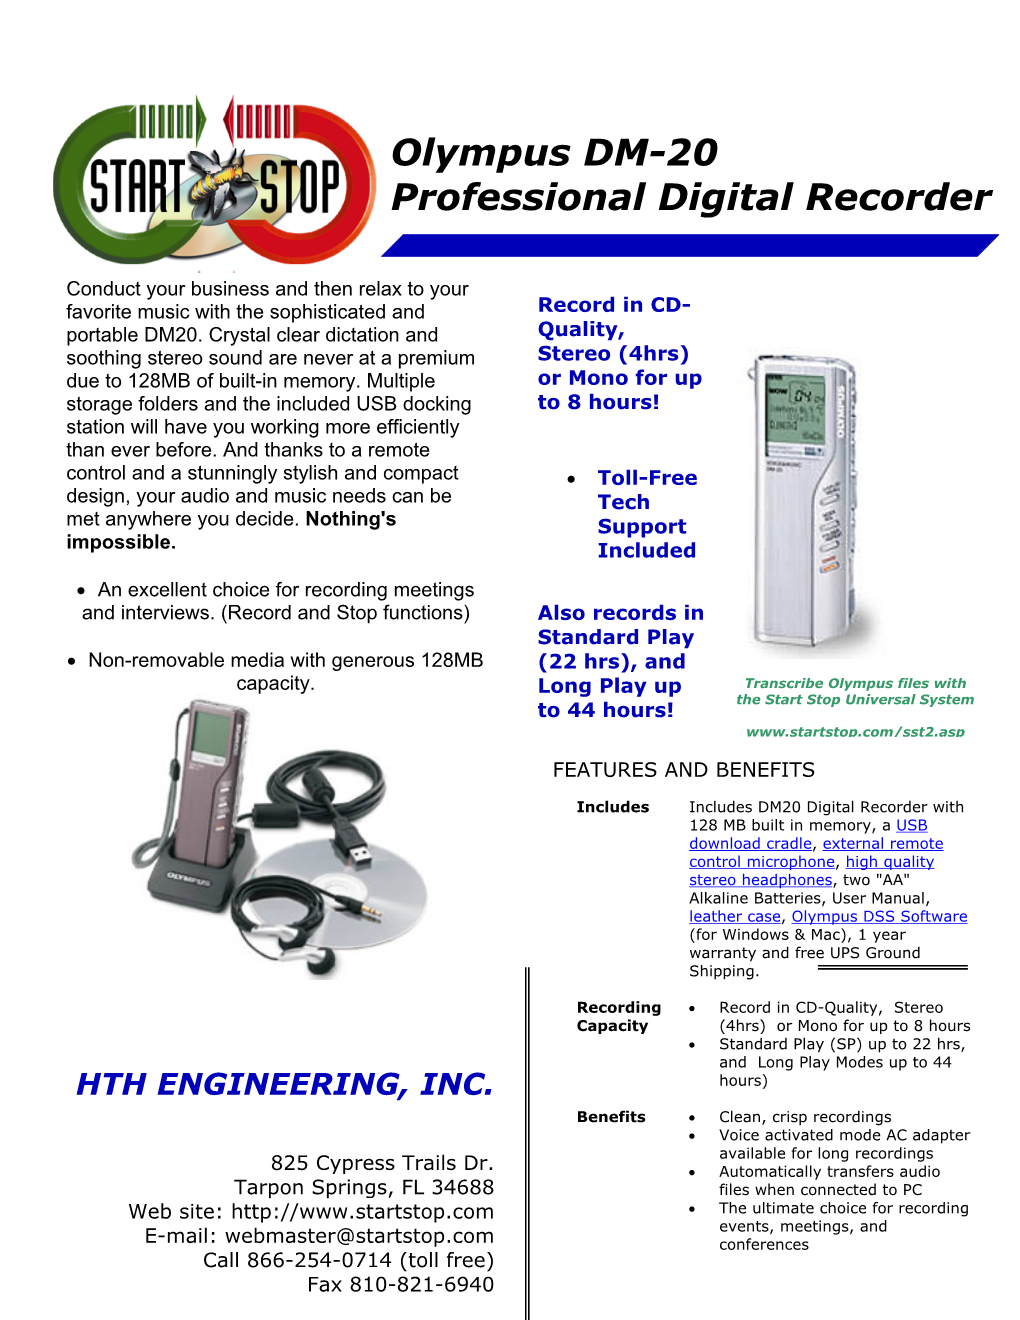 Olympus DM-20 Professional Digital Recorder